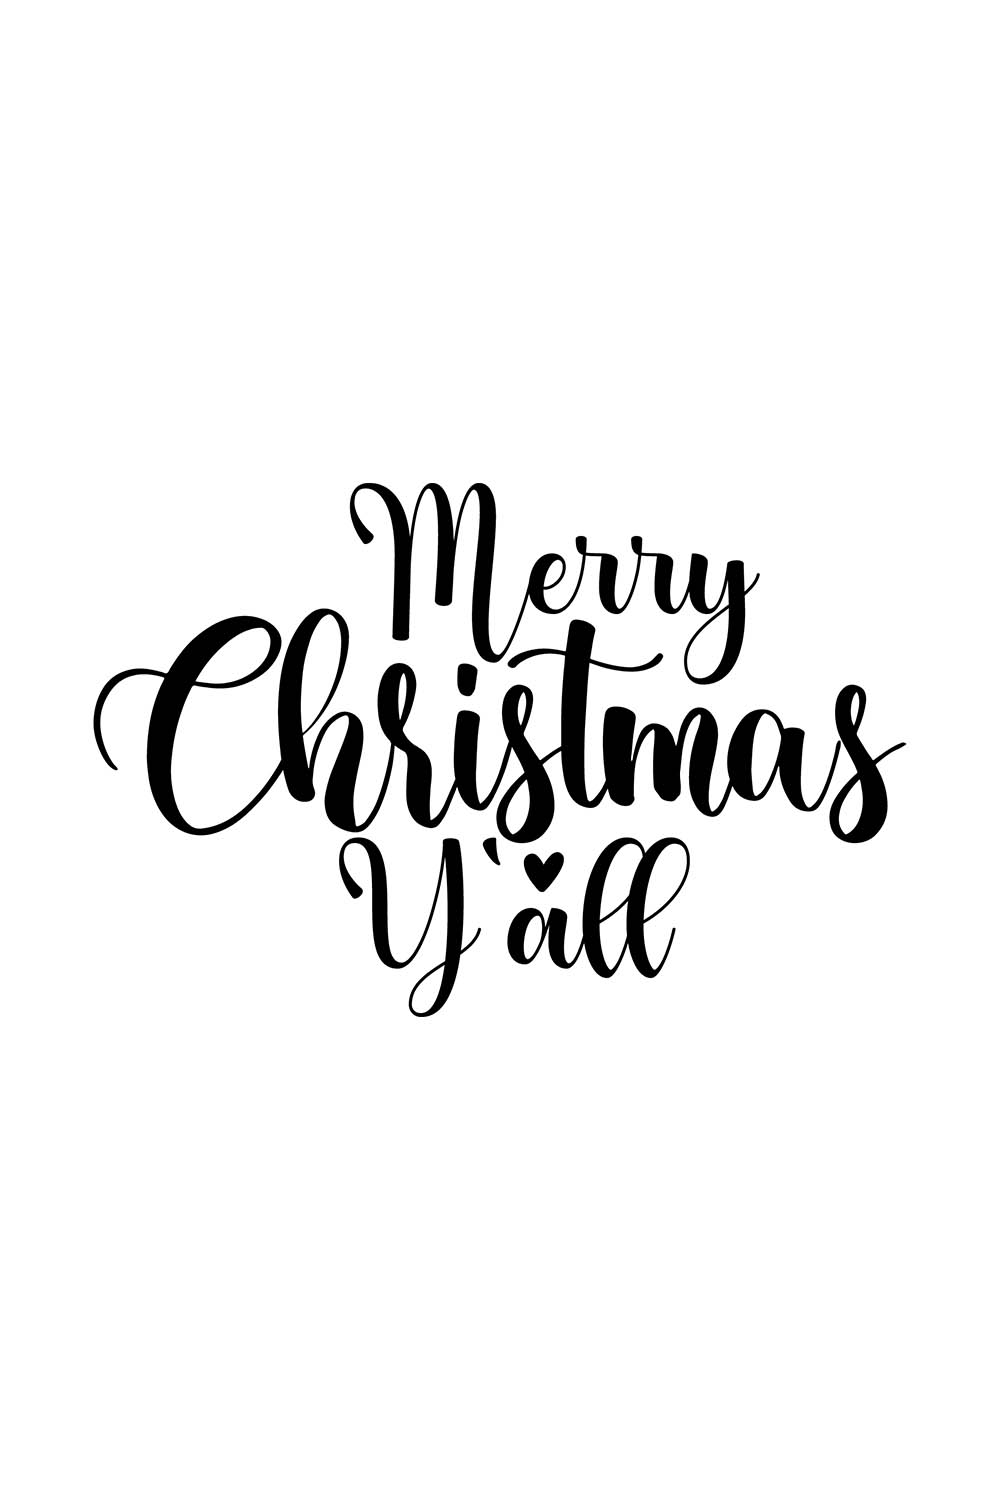 Merry Christmas Design SVG pinterest image.